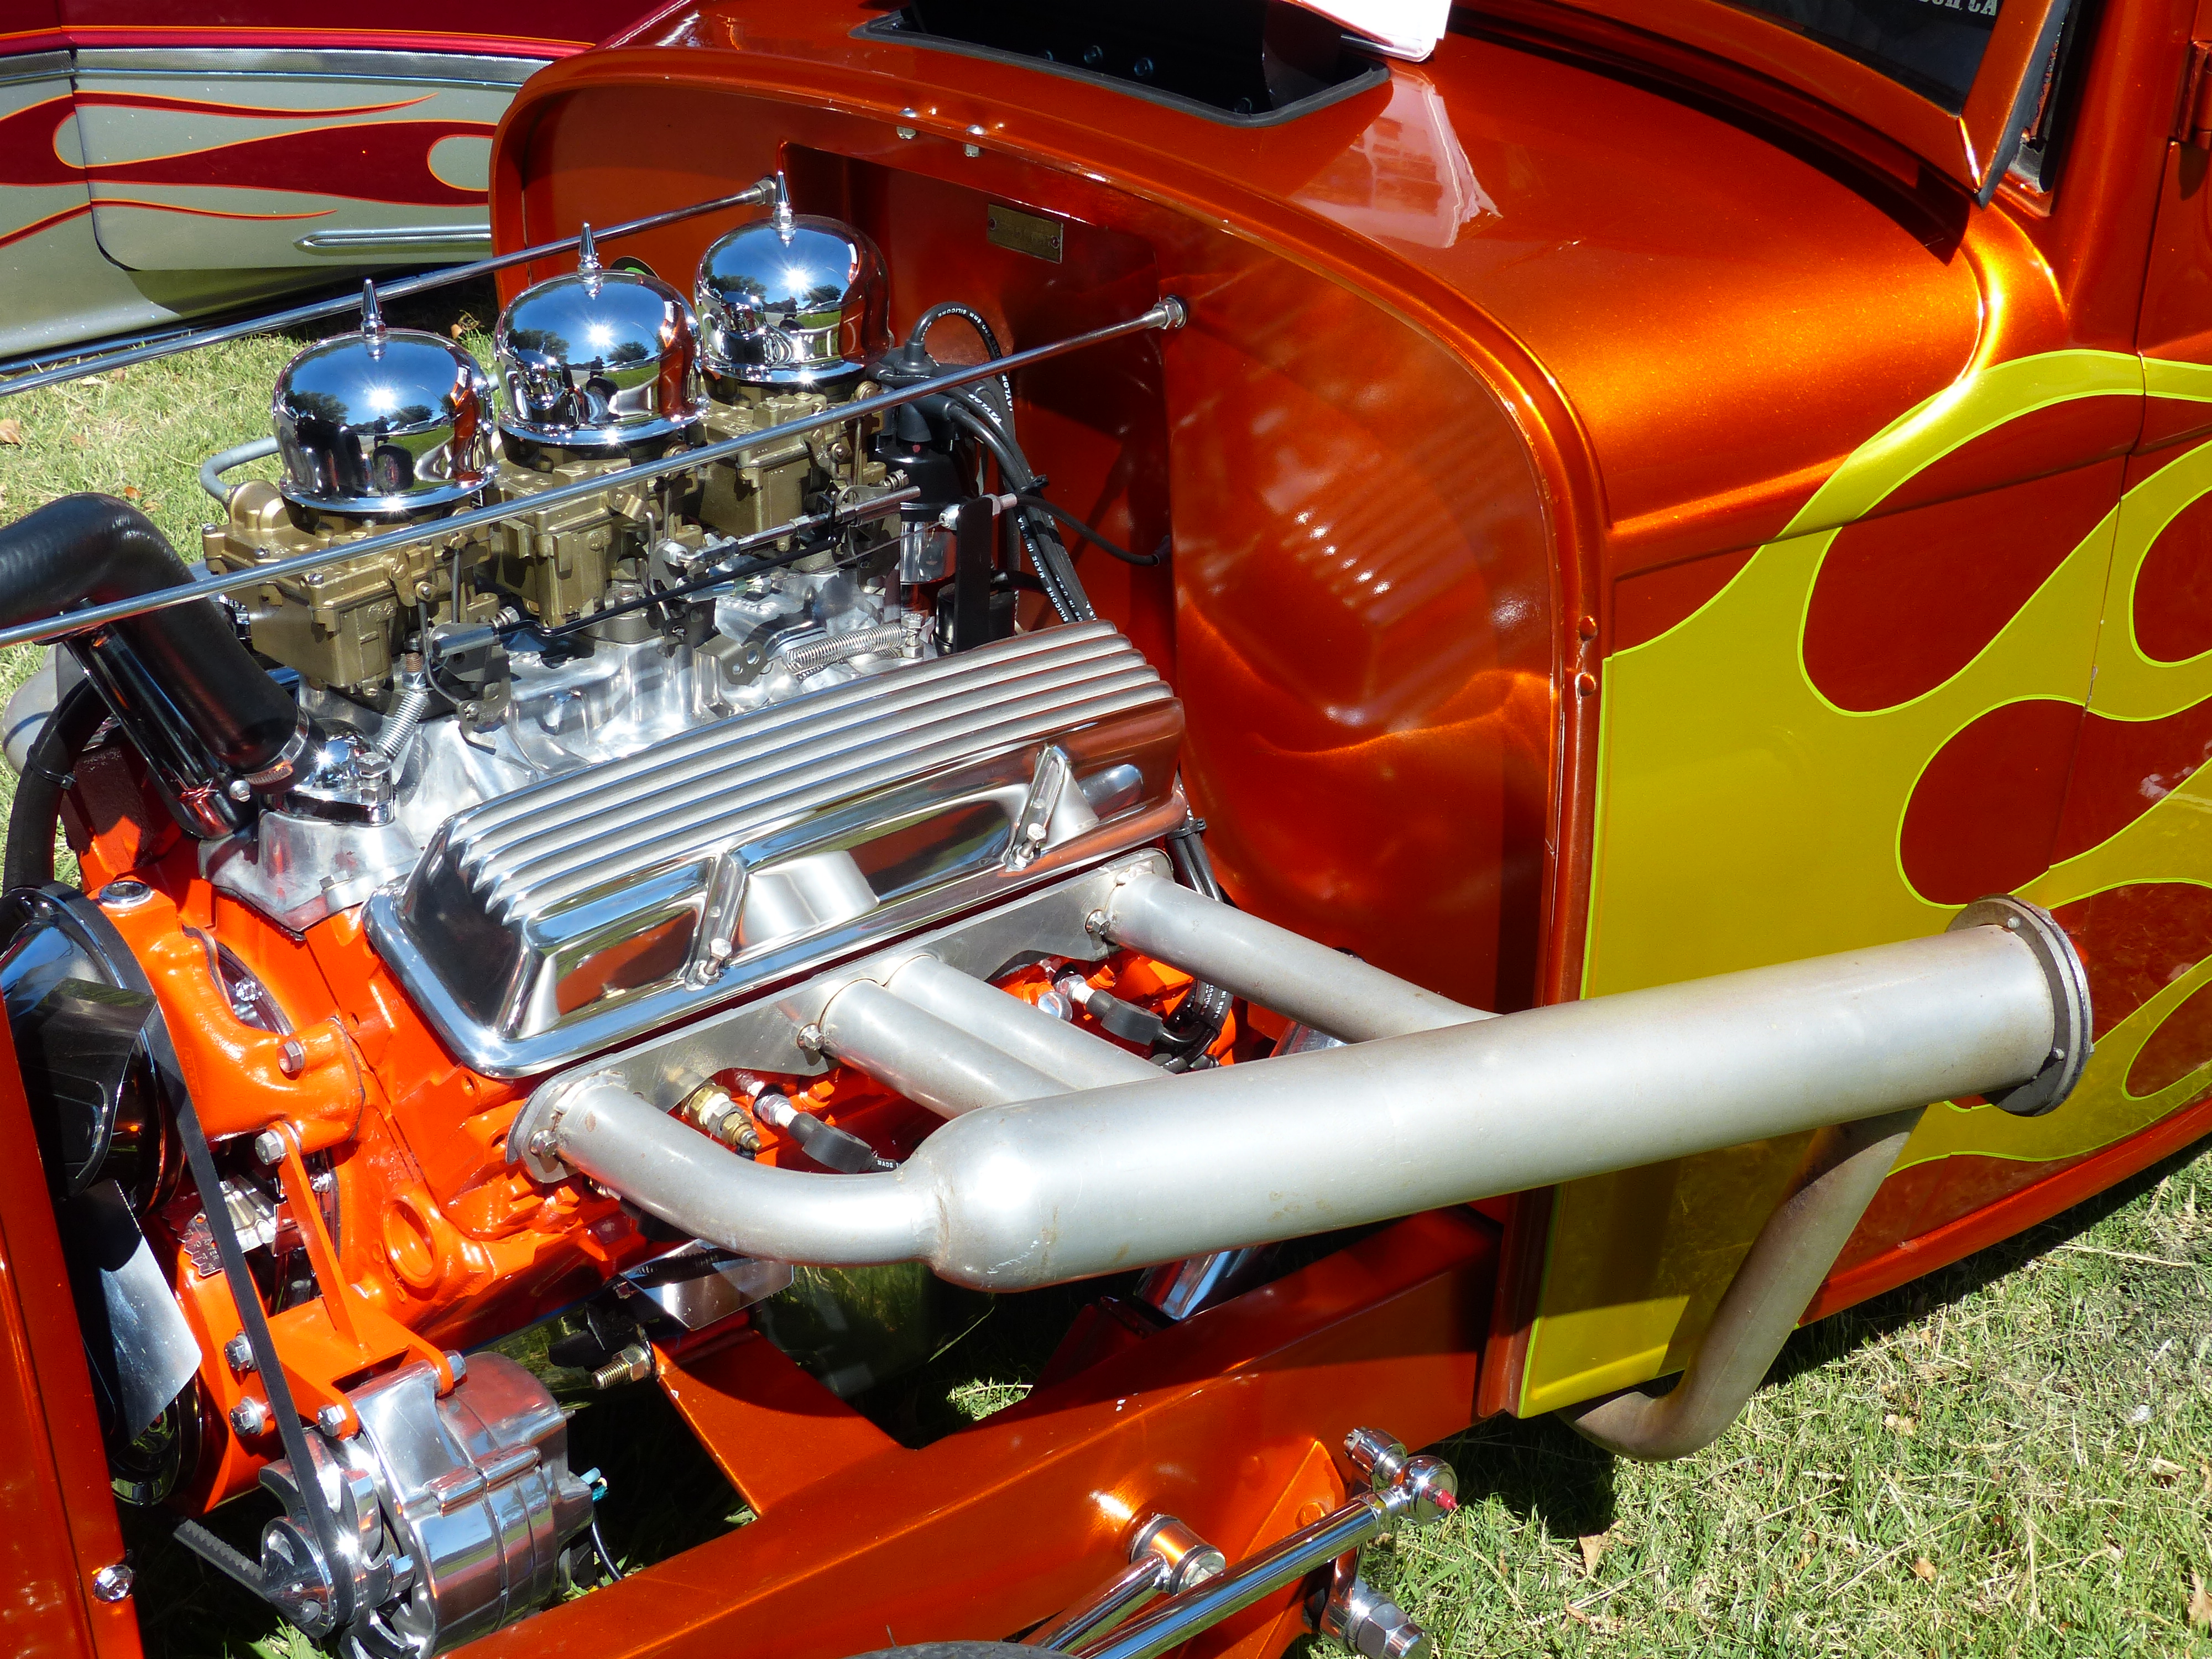 Switchblade 327 engine close-up